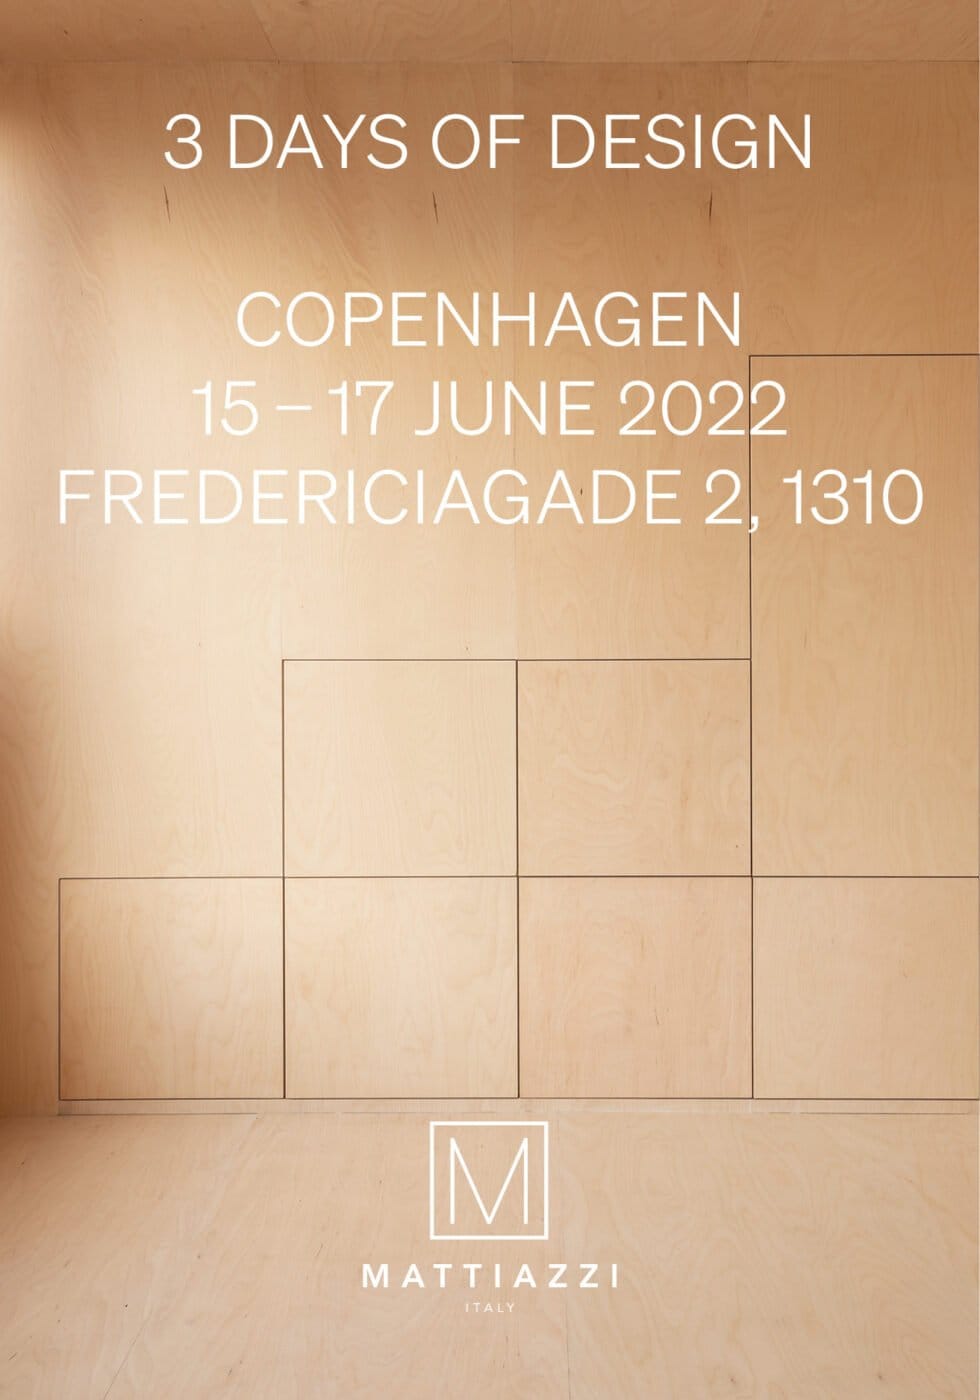 Mattiazzi 3DoD 2022 Copenhagen Invitation Card